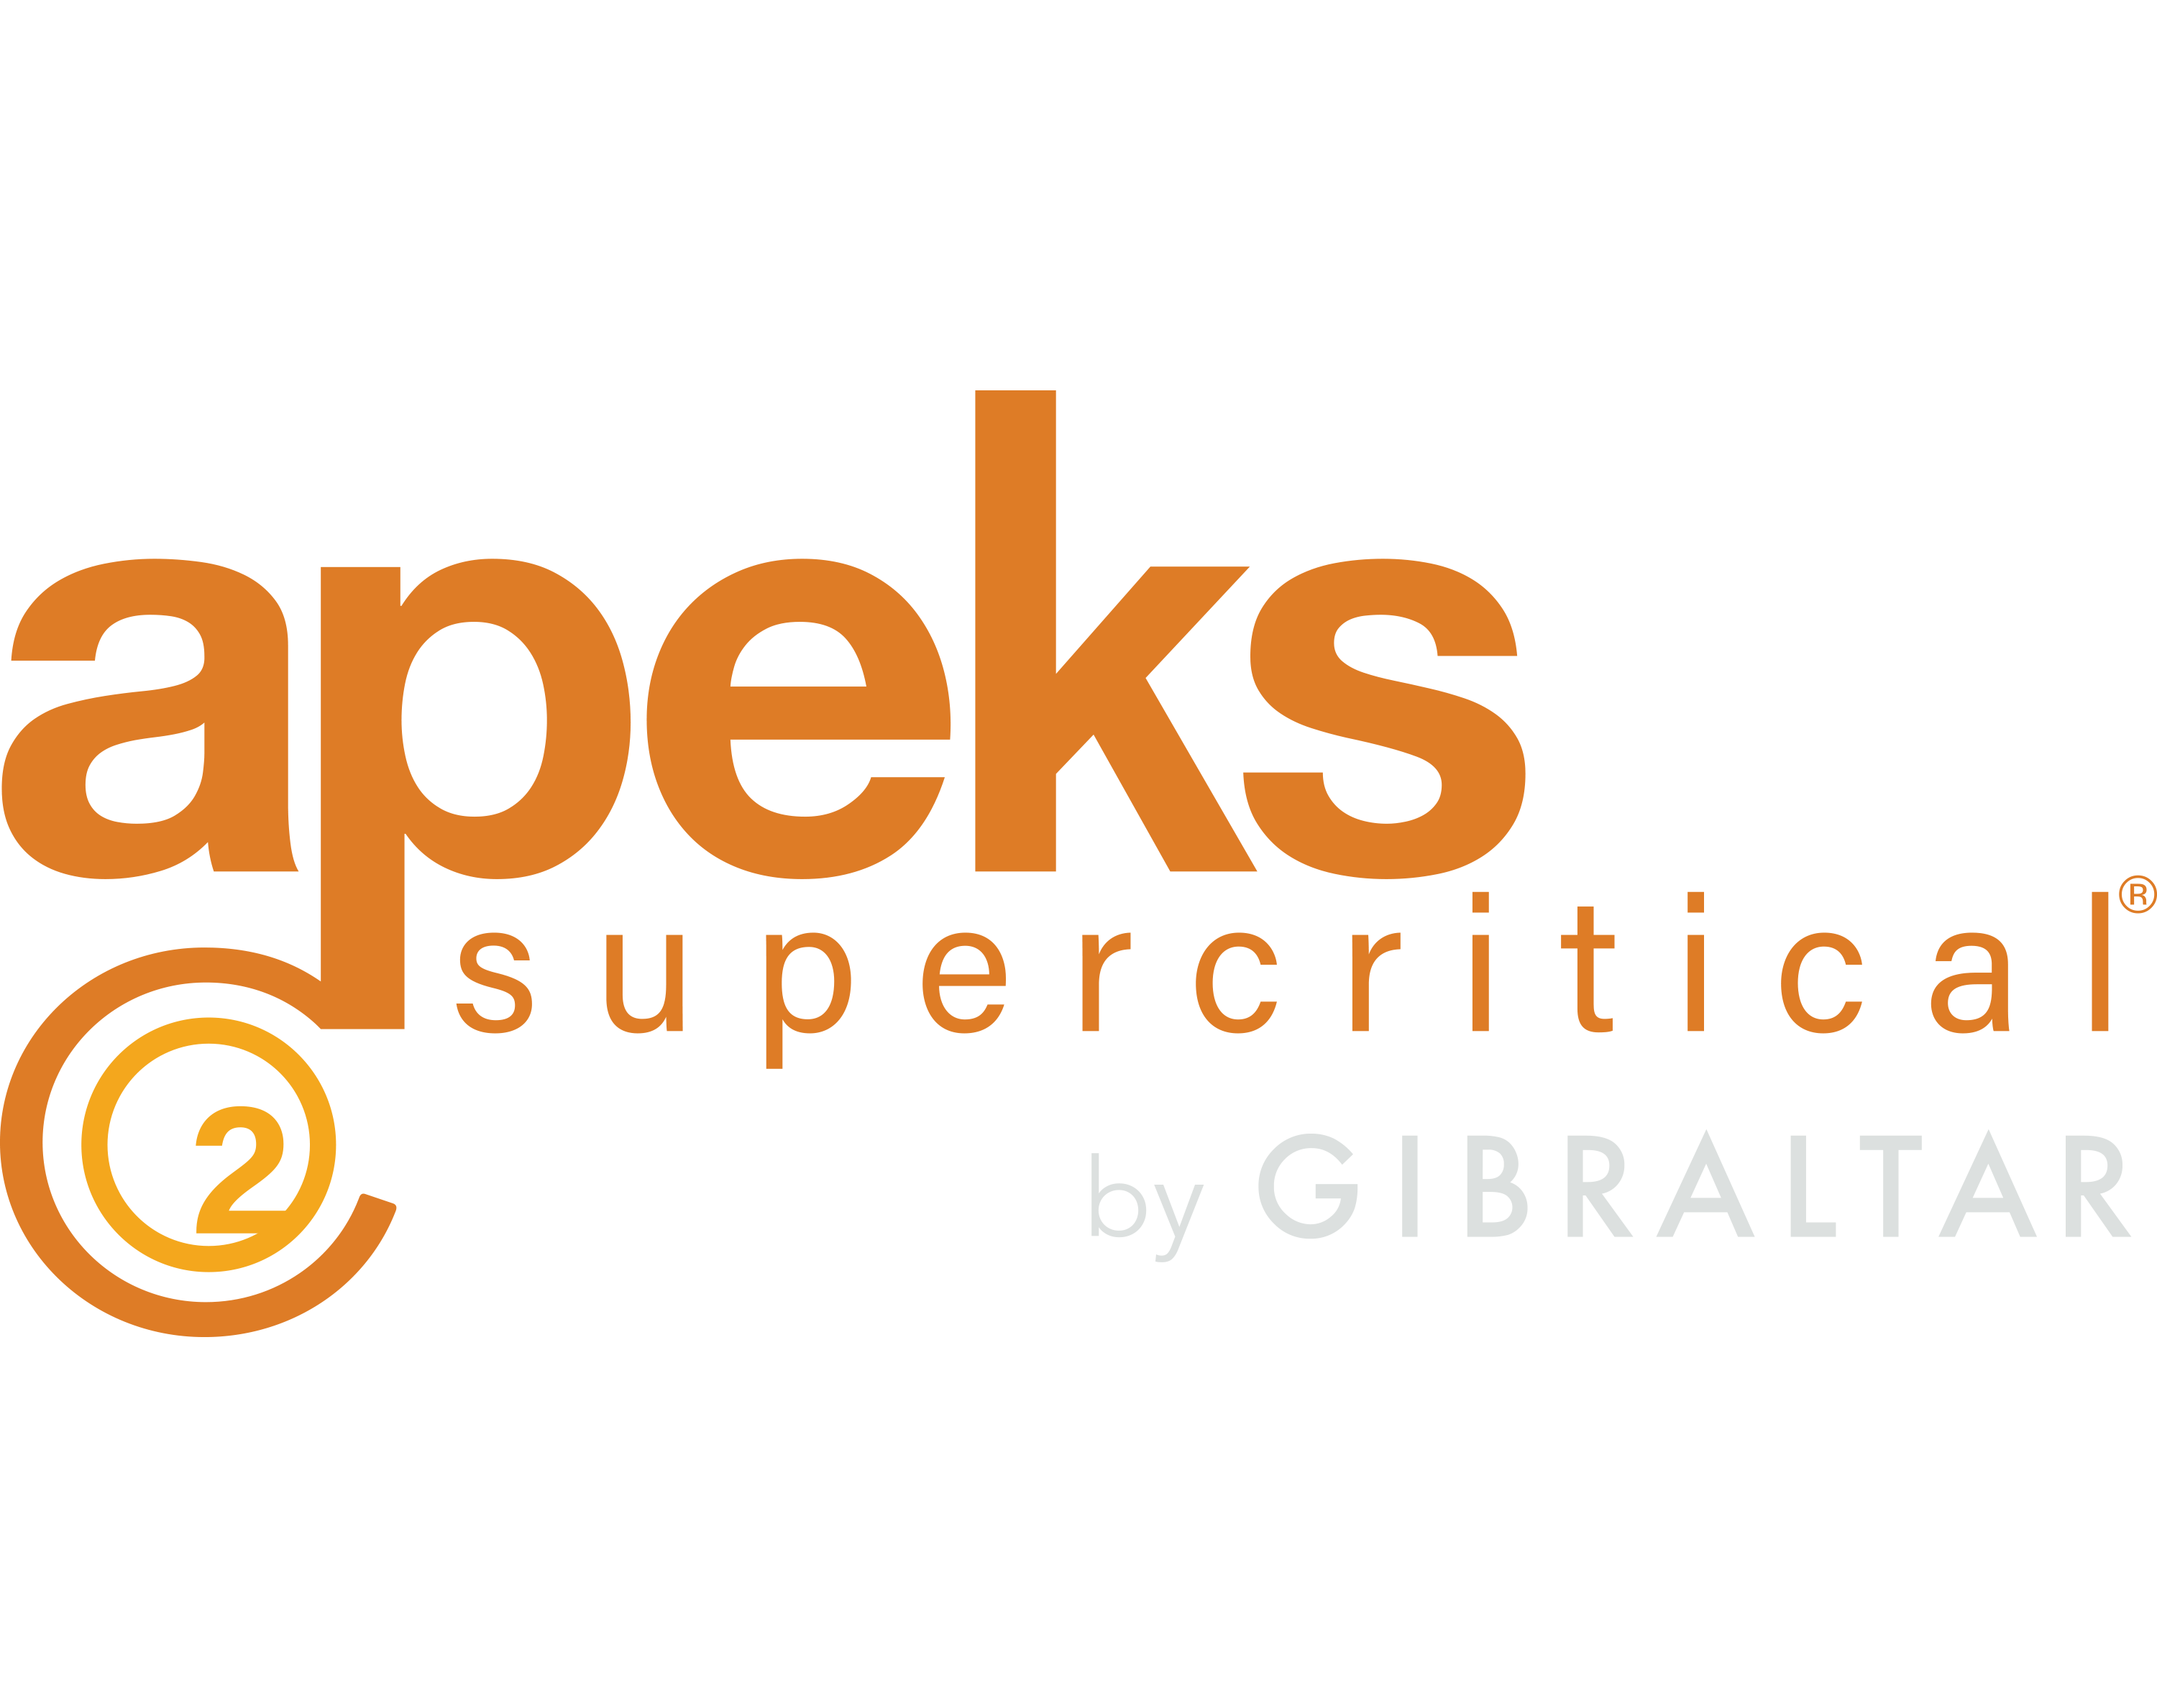 Apeks_Supercritical_by_GIBRALTAR_color